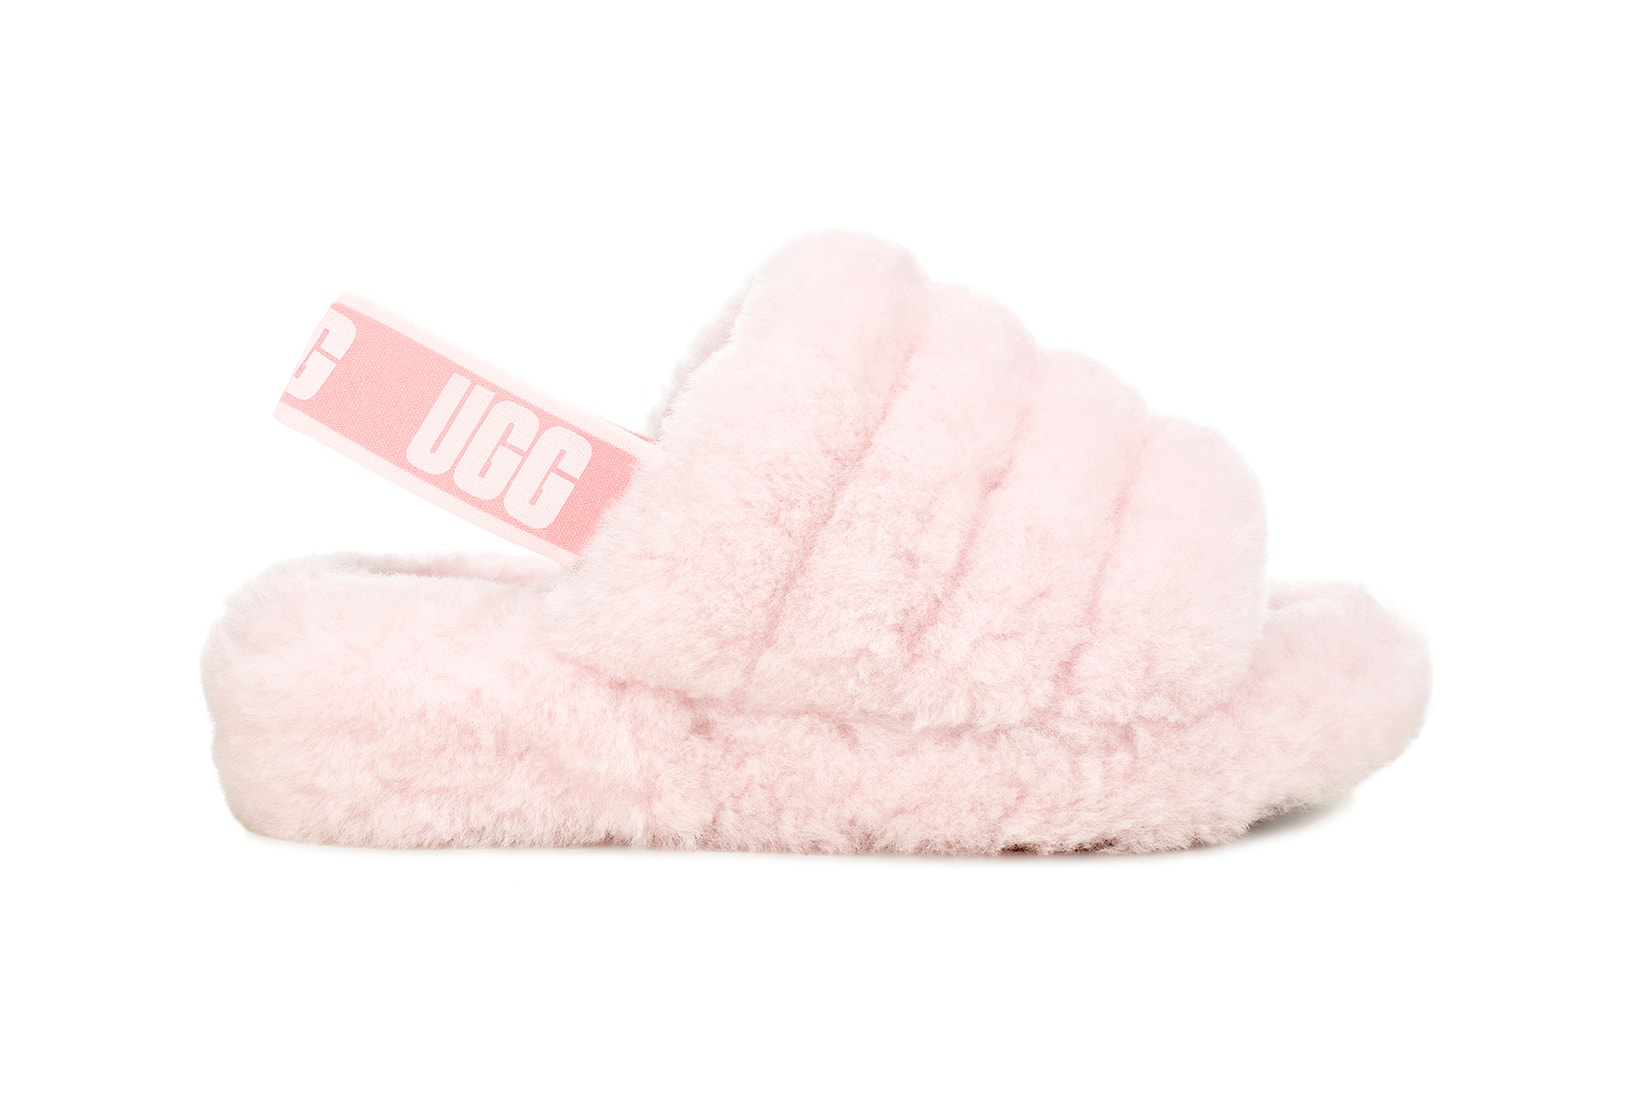 UGG Fluff Yeah Sandals Summer 2018 Seashell Pink Coral Lantana Black Charcoal Grey